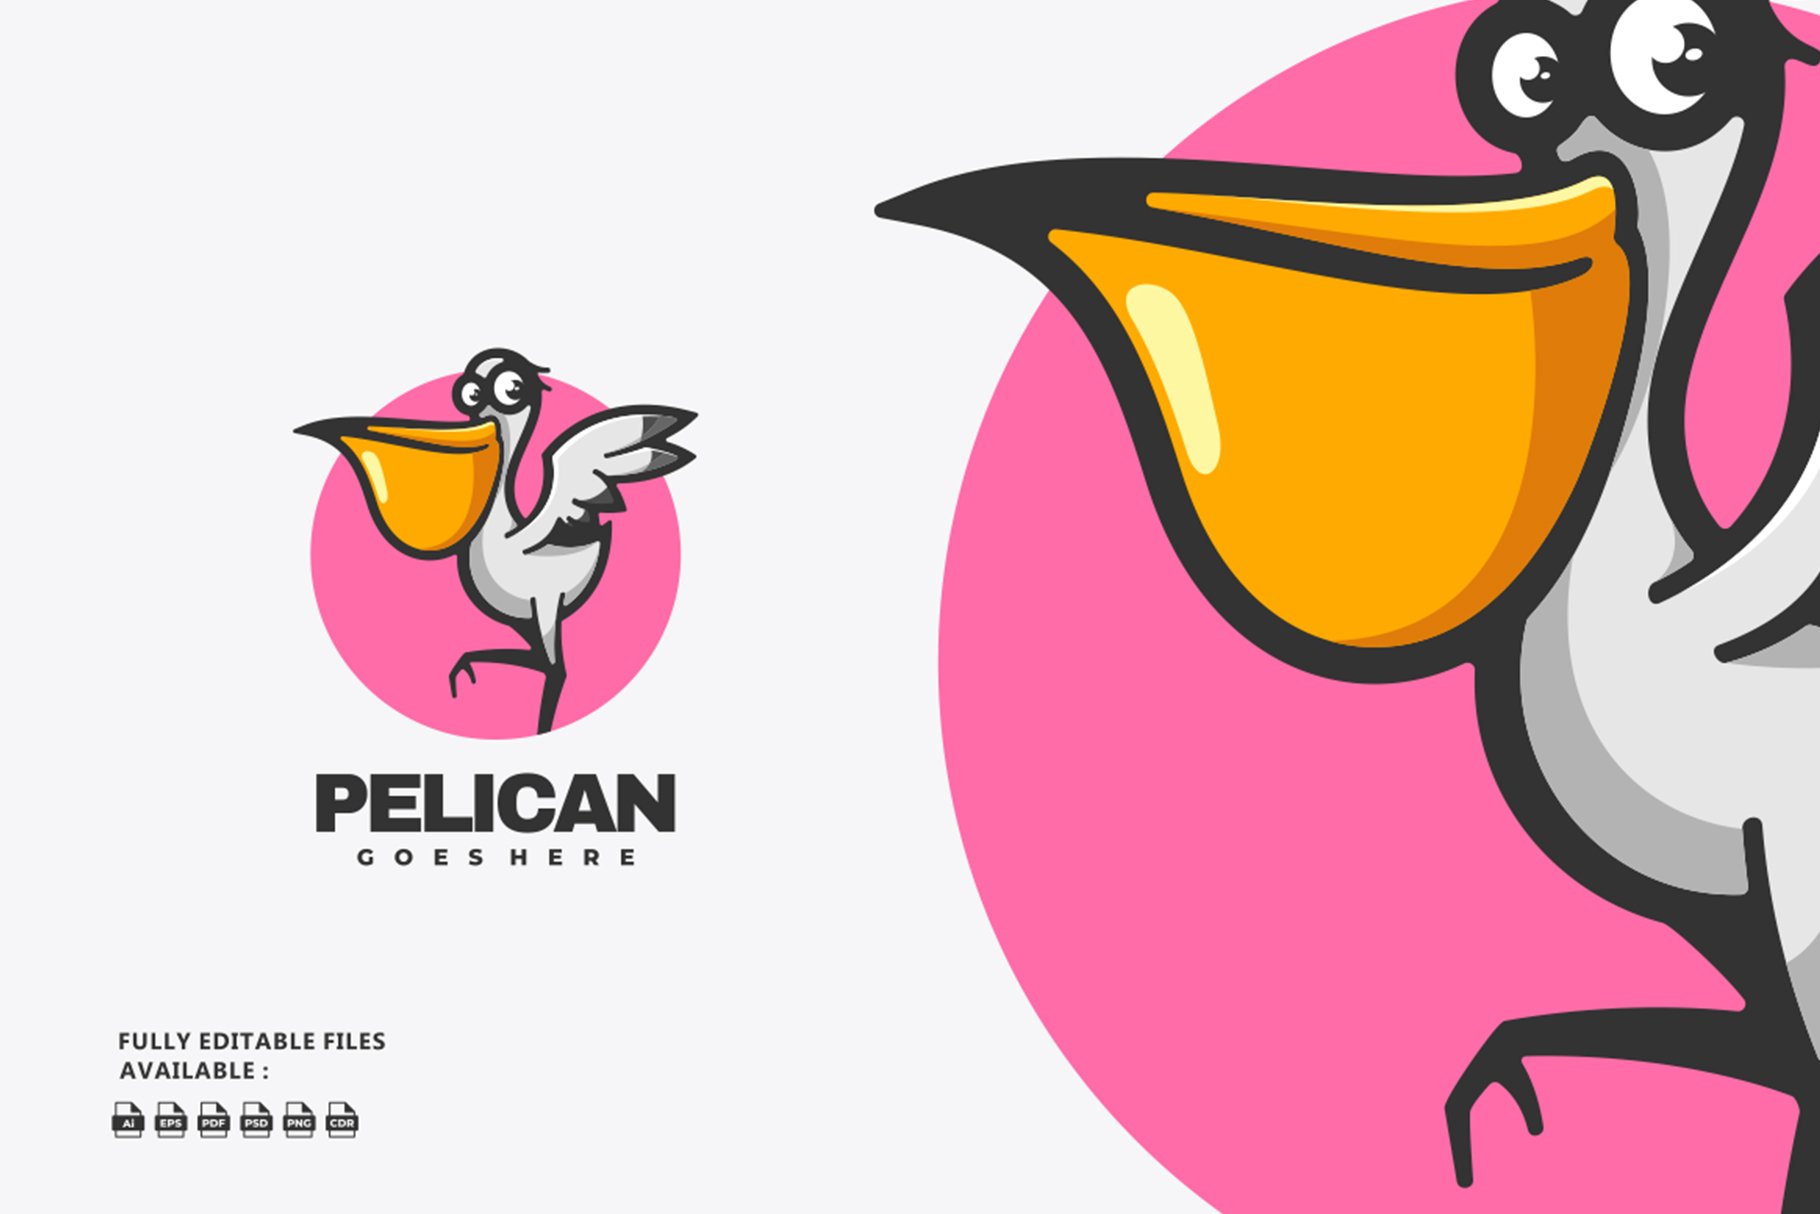 Pelican Simple Mascot Logo cover image.